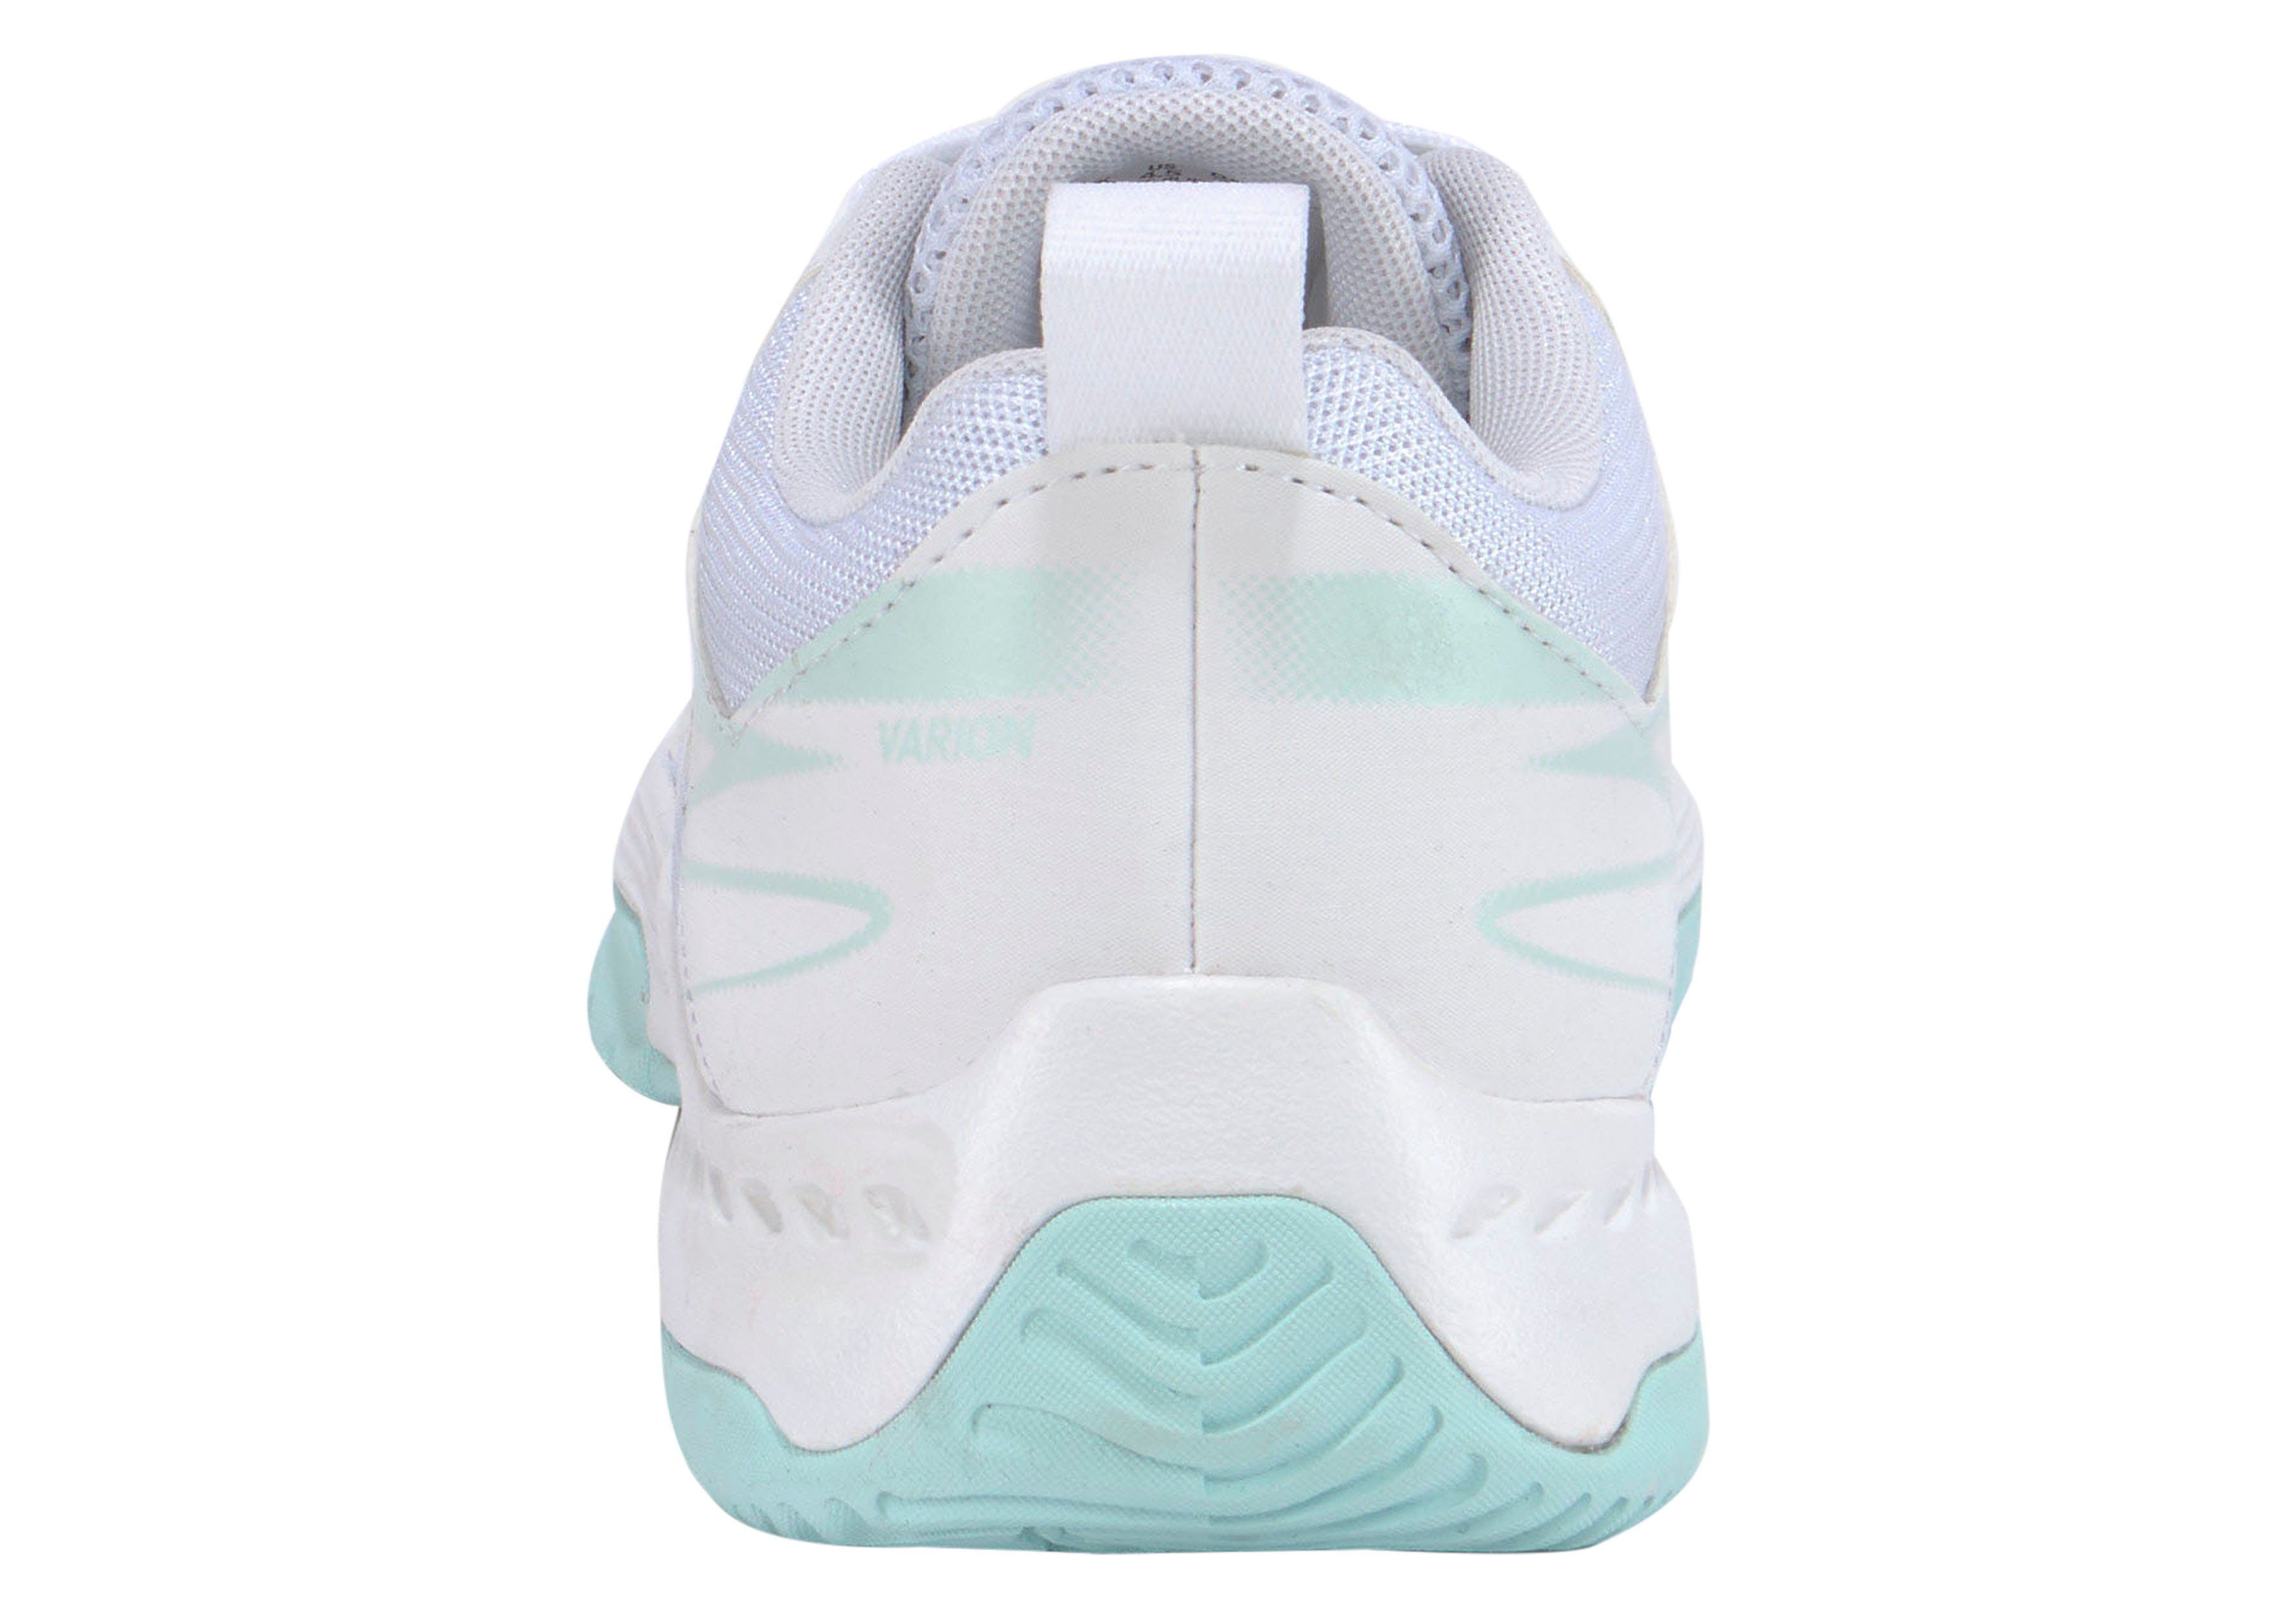 PUMA VARION Aqua White-Light Sneaker II JR PUMA